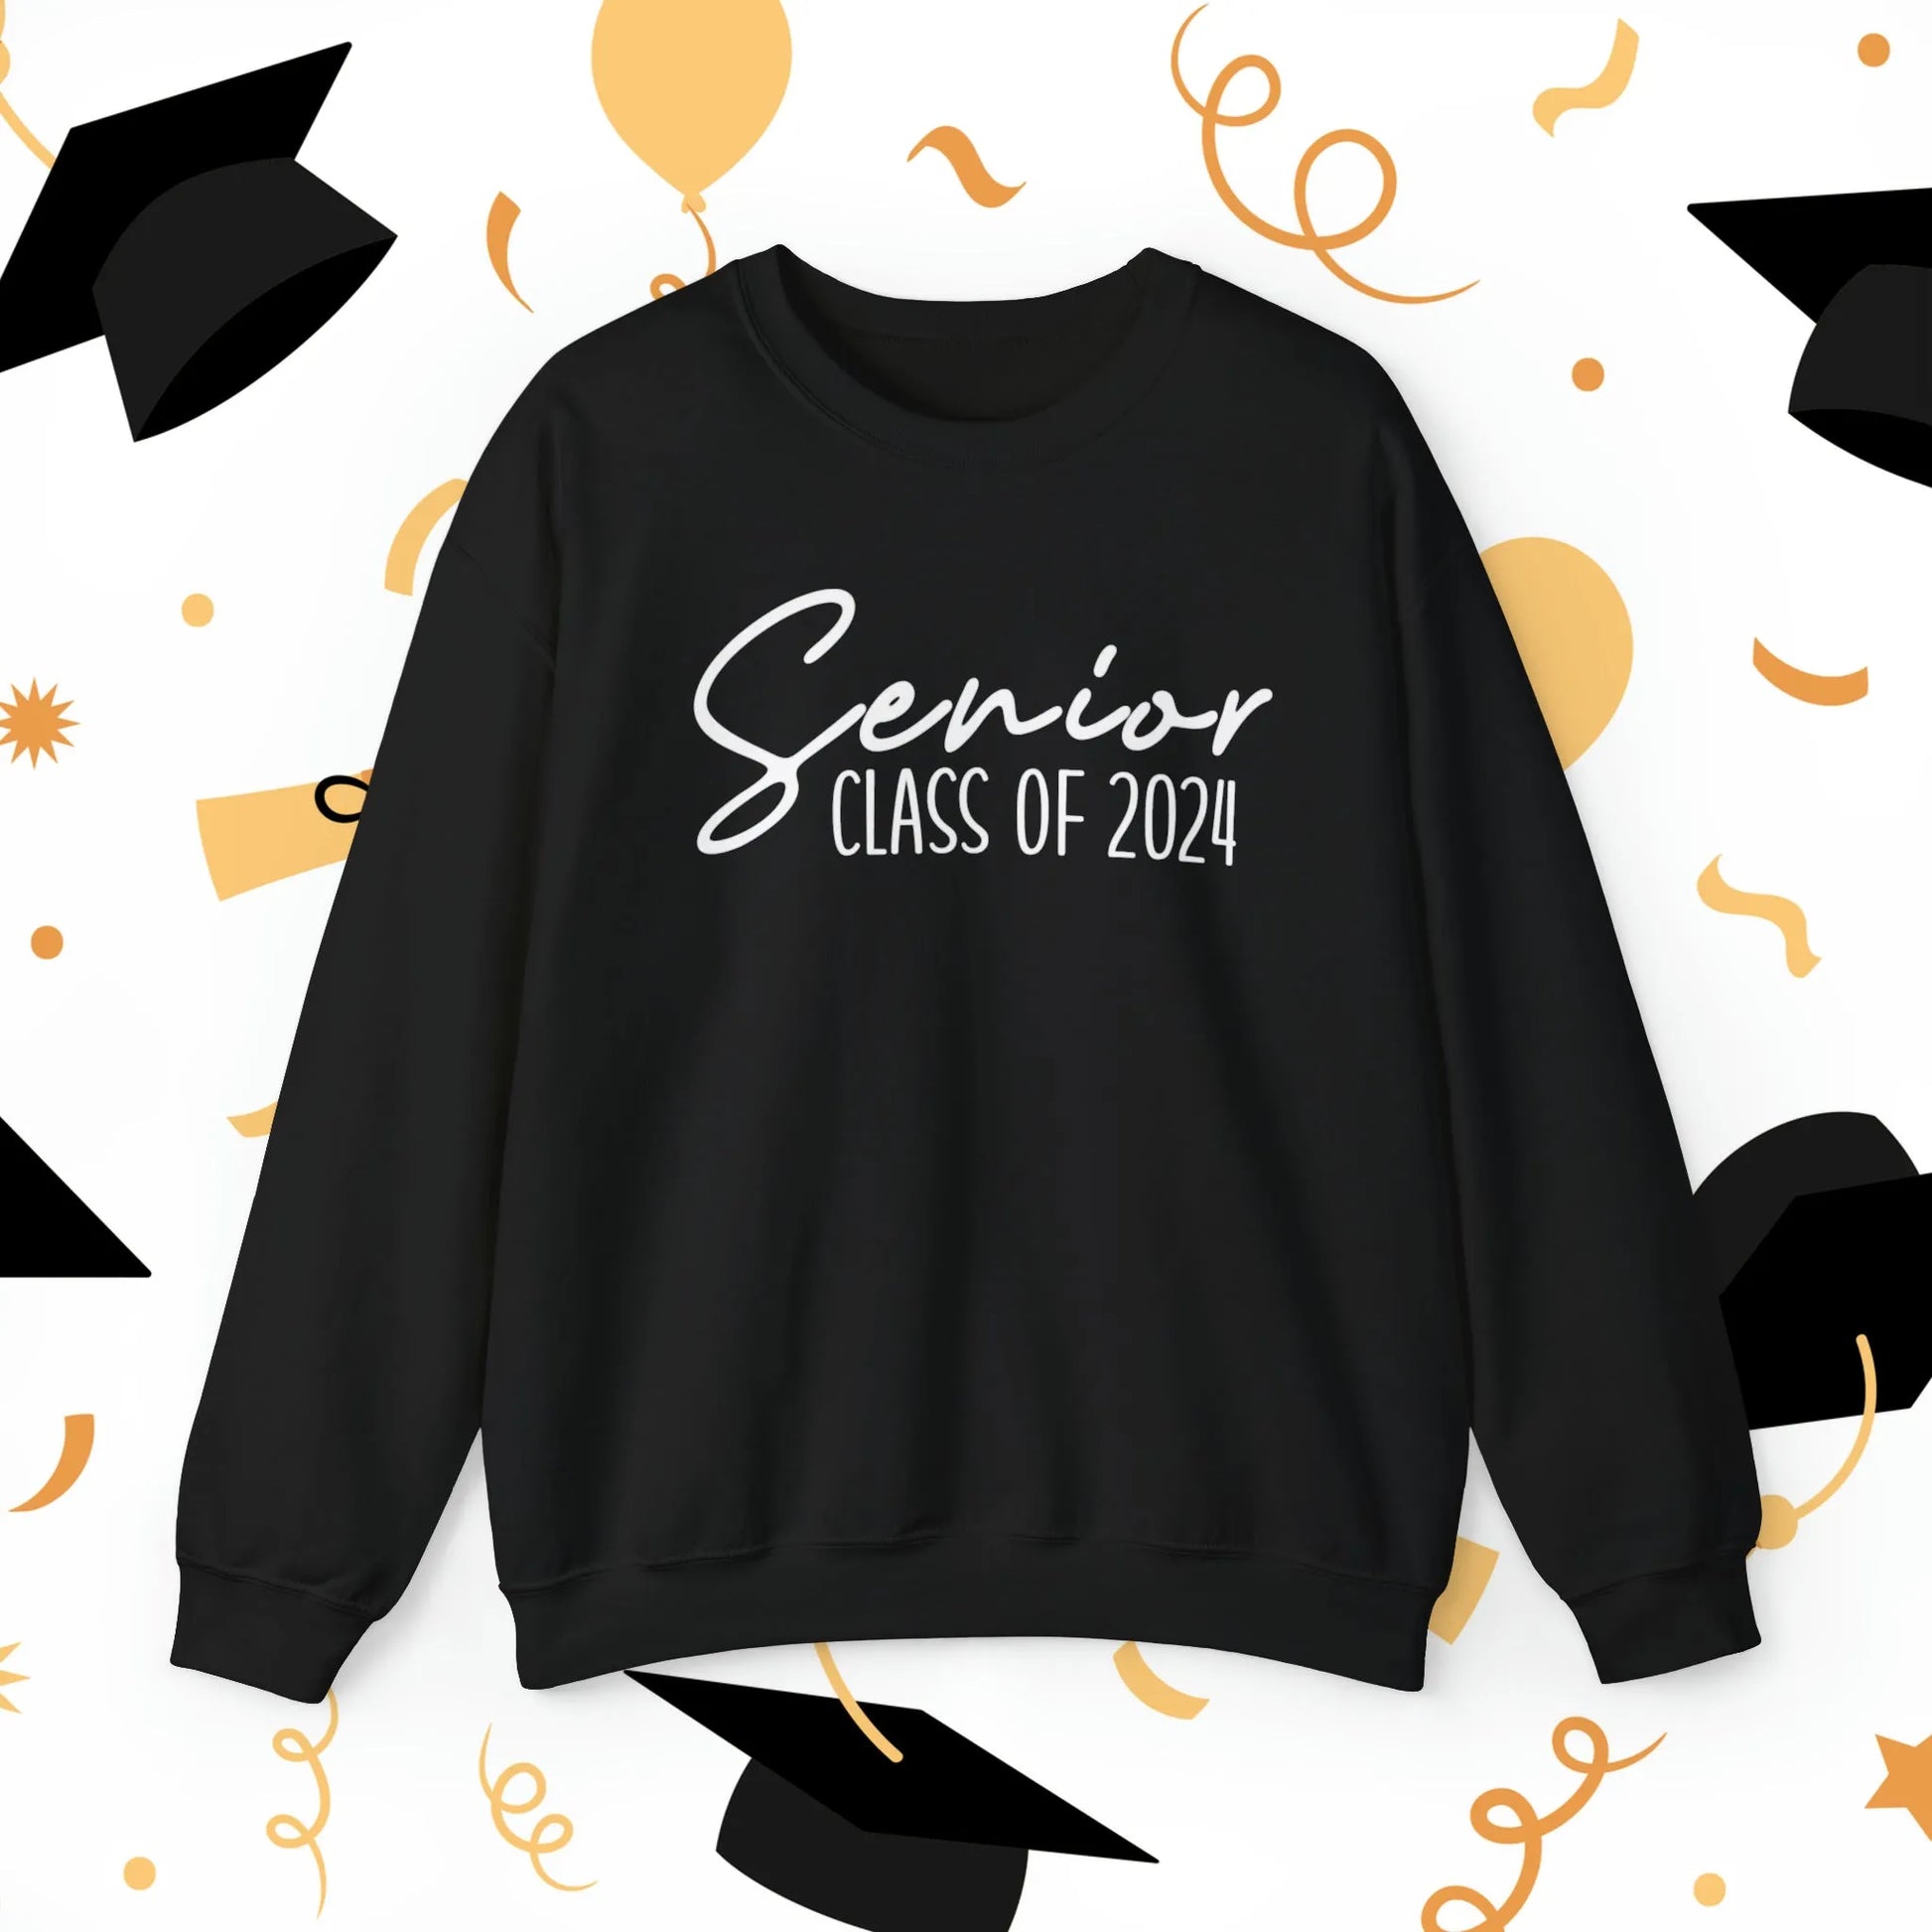 Senior Class of 2024 Crewneck Sweatshirt - Senior 2024 Sweatshirt Black